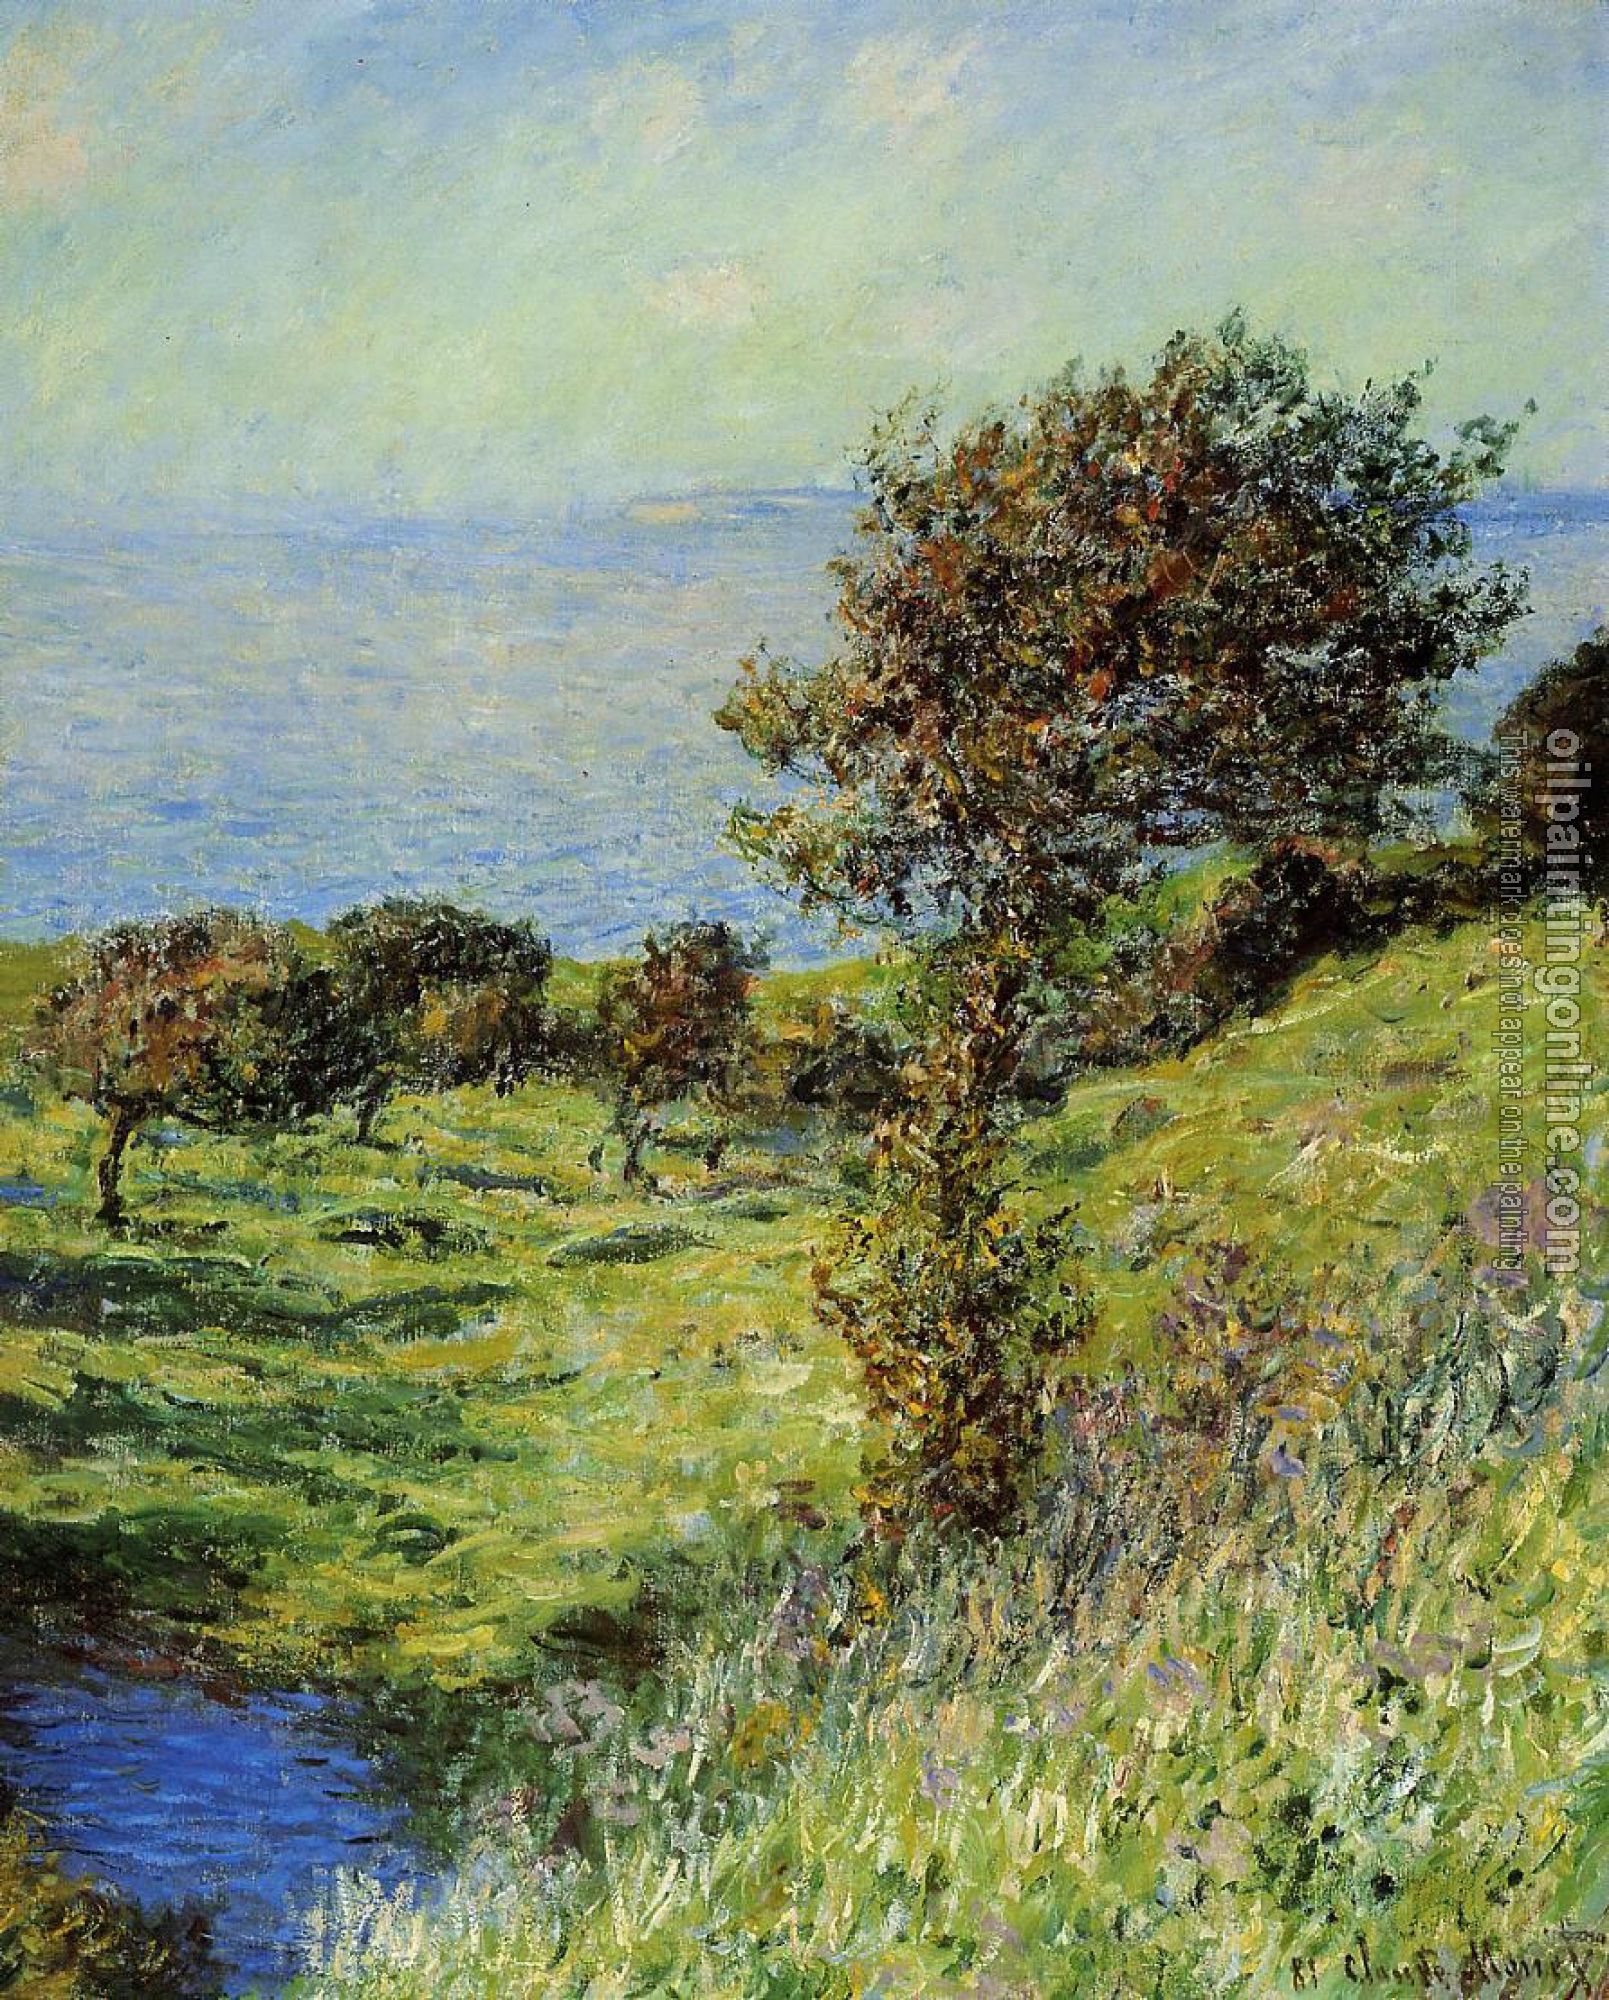 Monet, Claude Oscar - Gust of Wind